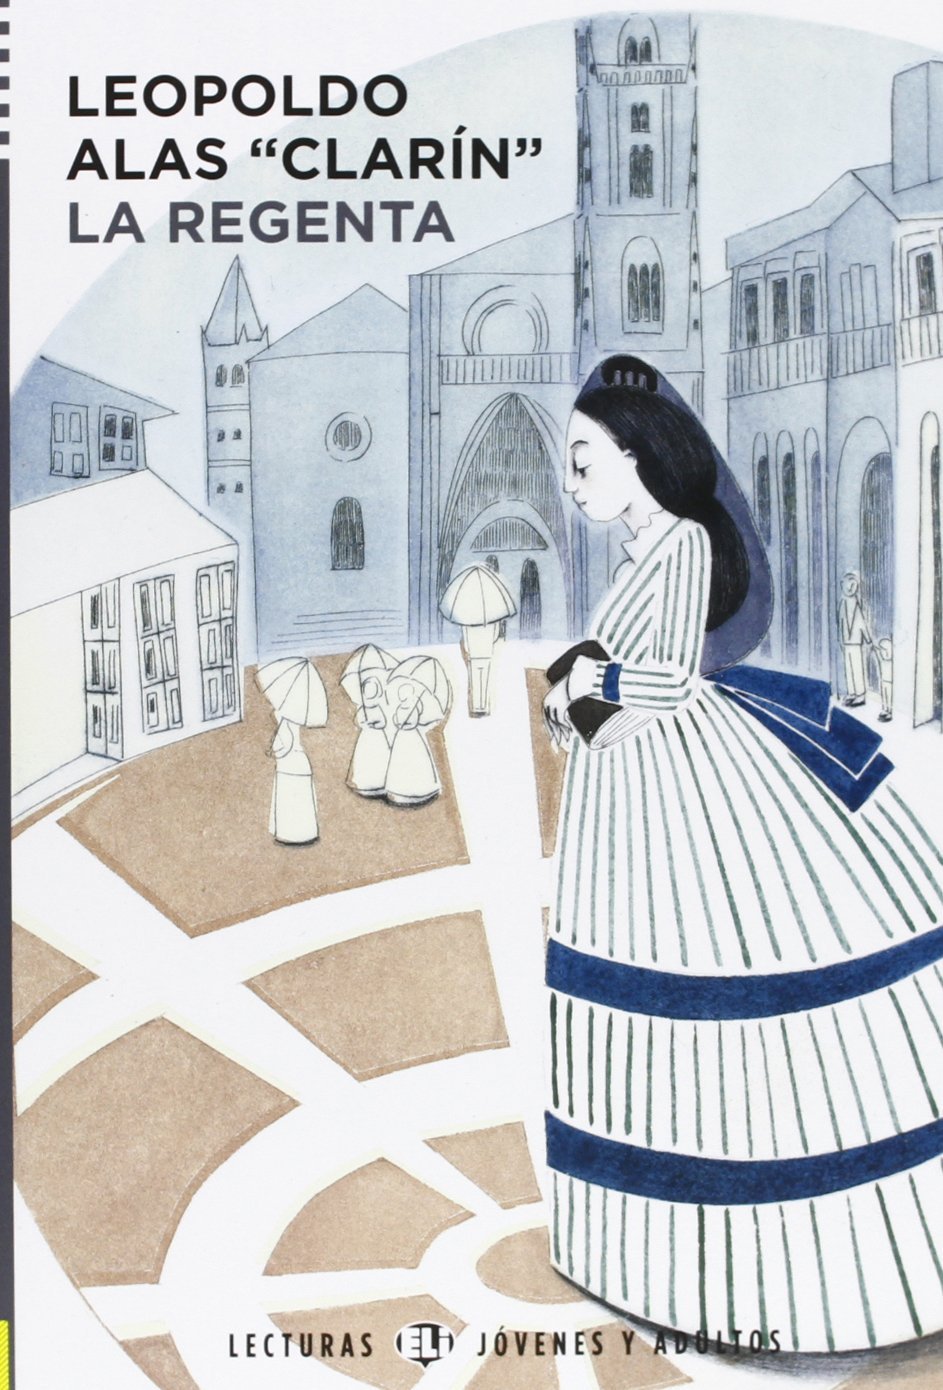 La Regenta (The Regent) by Leopoldo Alas «Clarín» (Hardcover) for